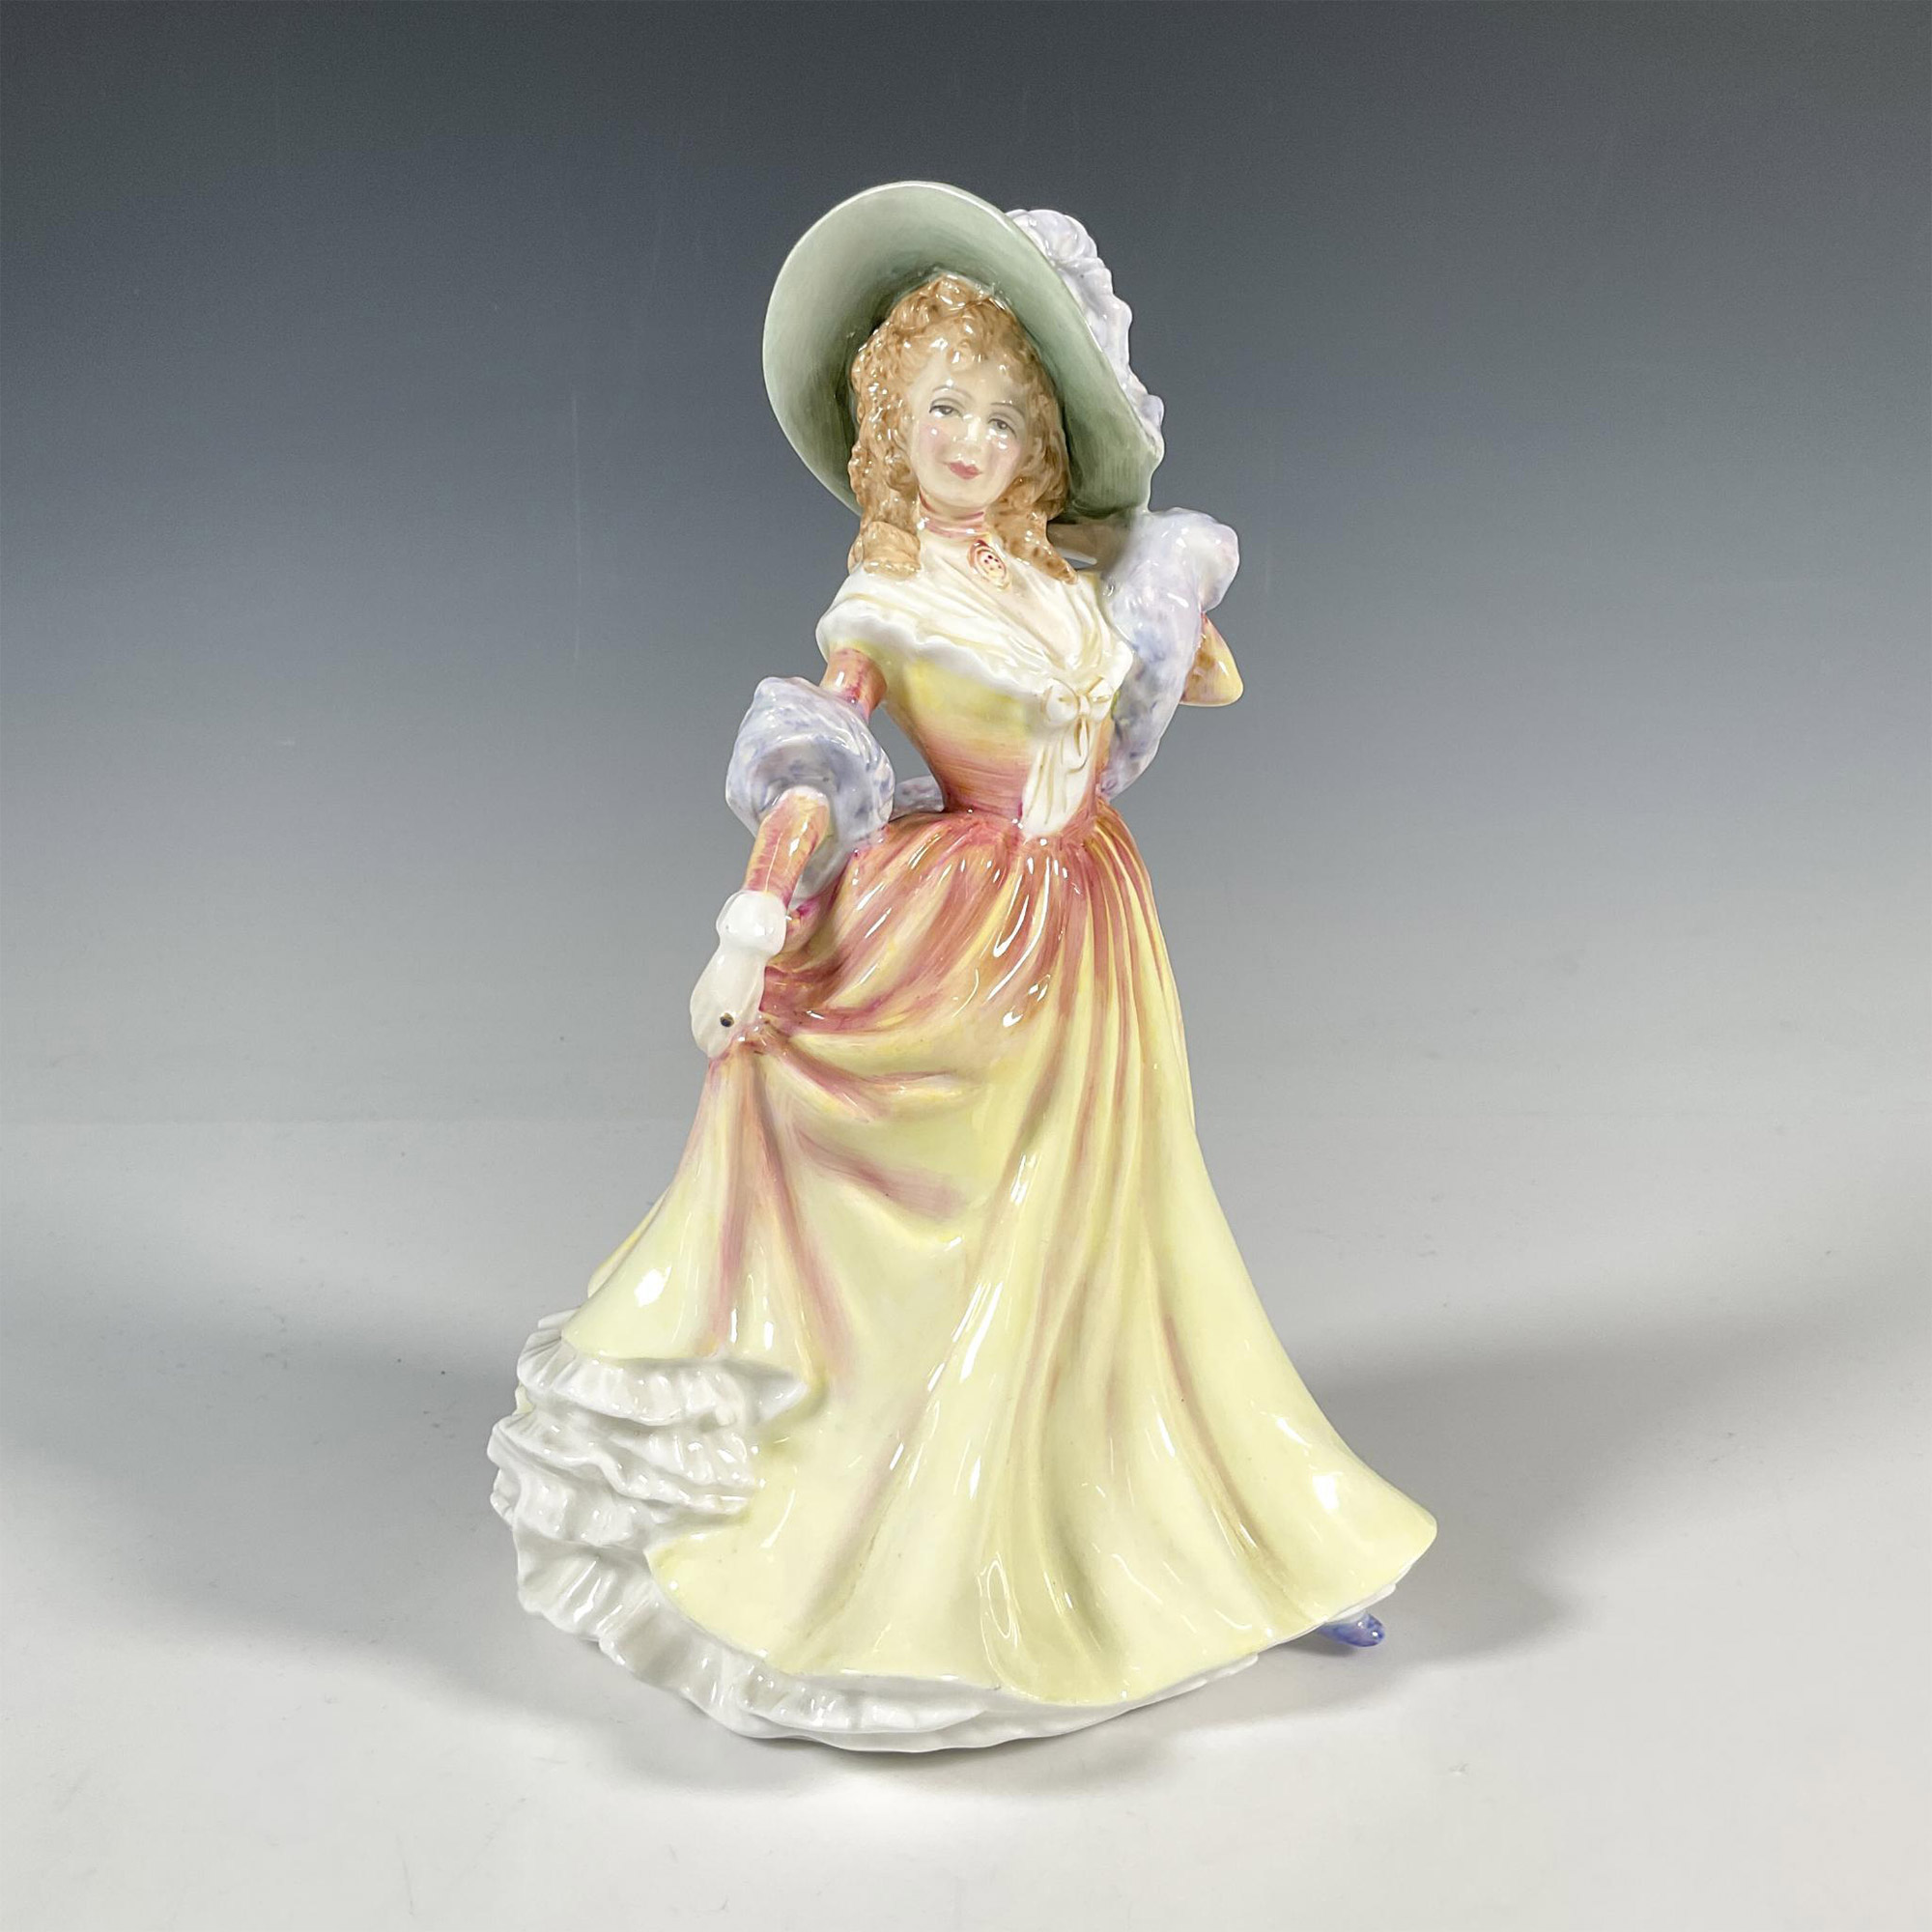 Katie HN3360 - Royal Doulton Figurine